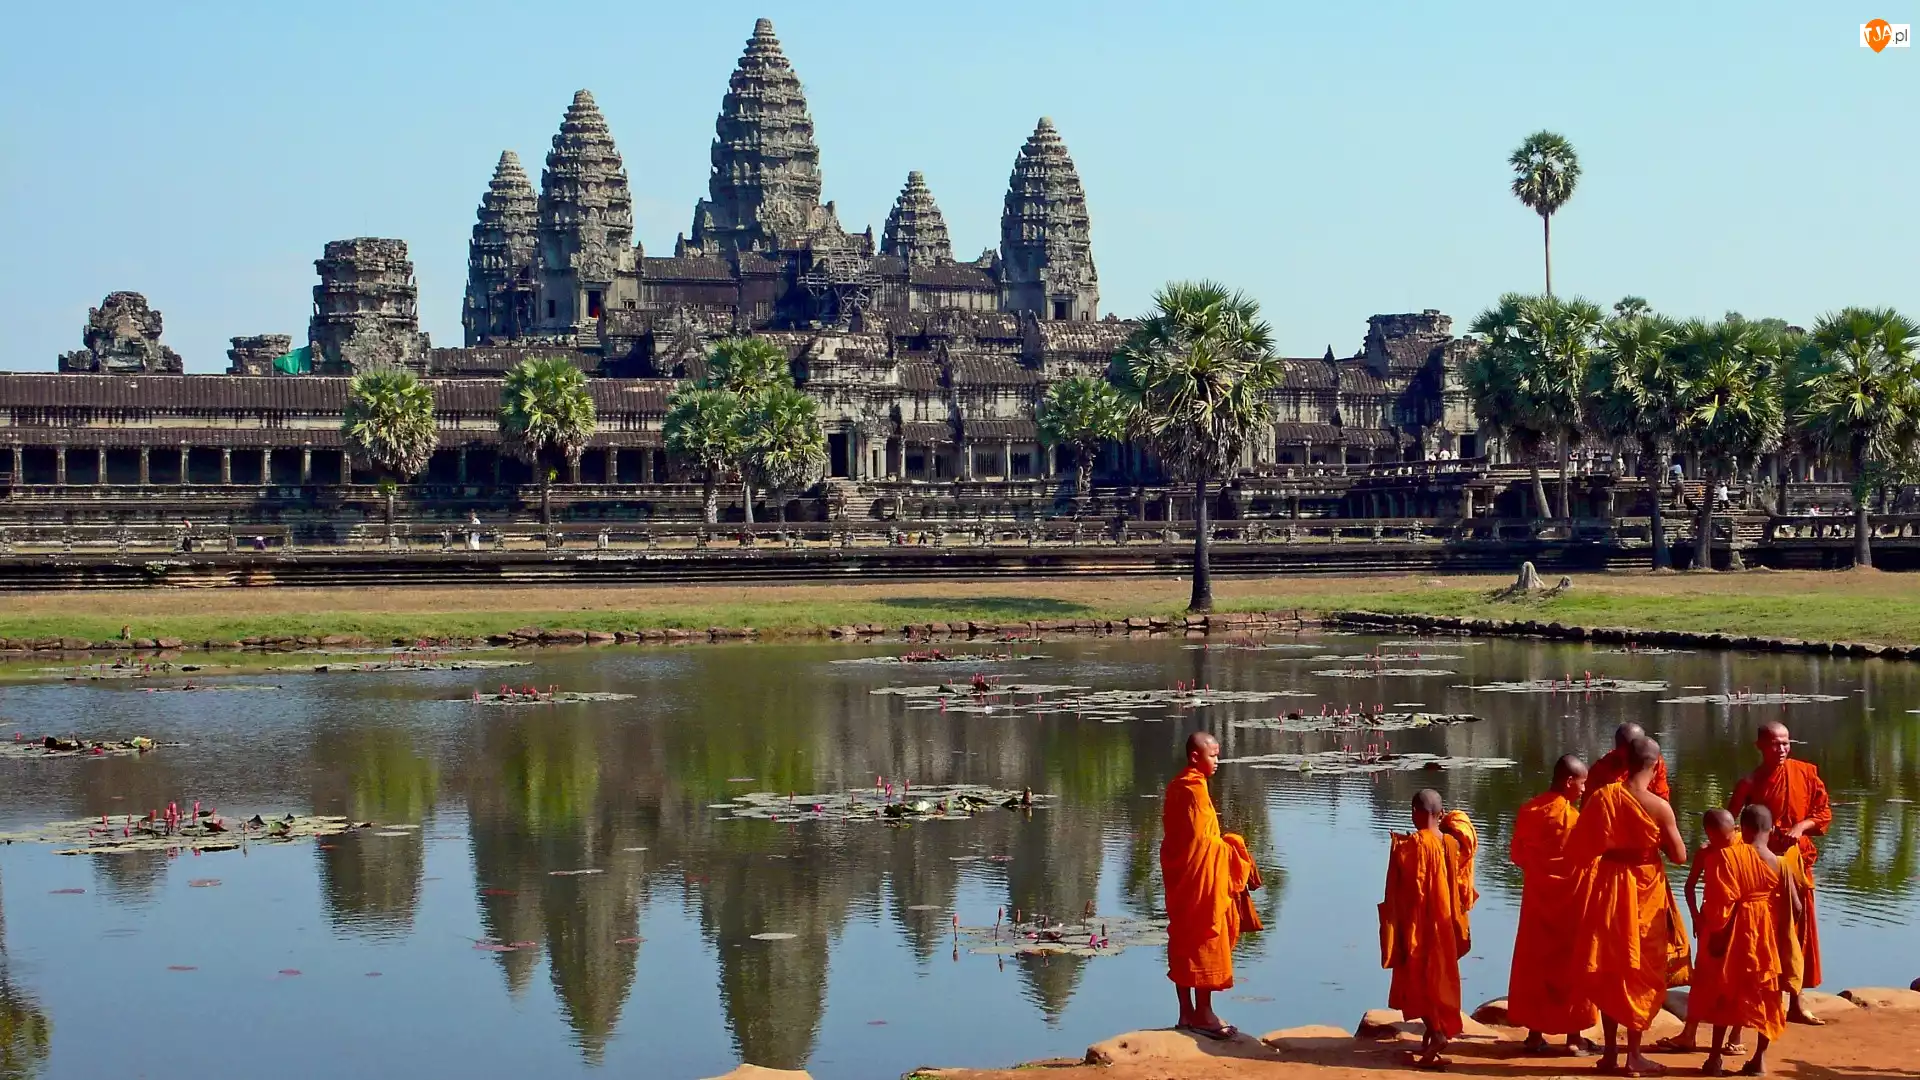 Kambodża, Staw, Angkor Wat, Mnisi